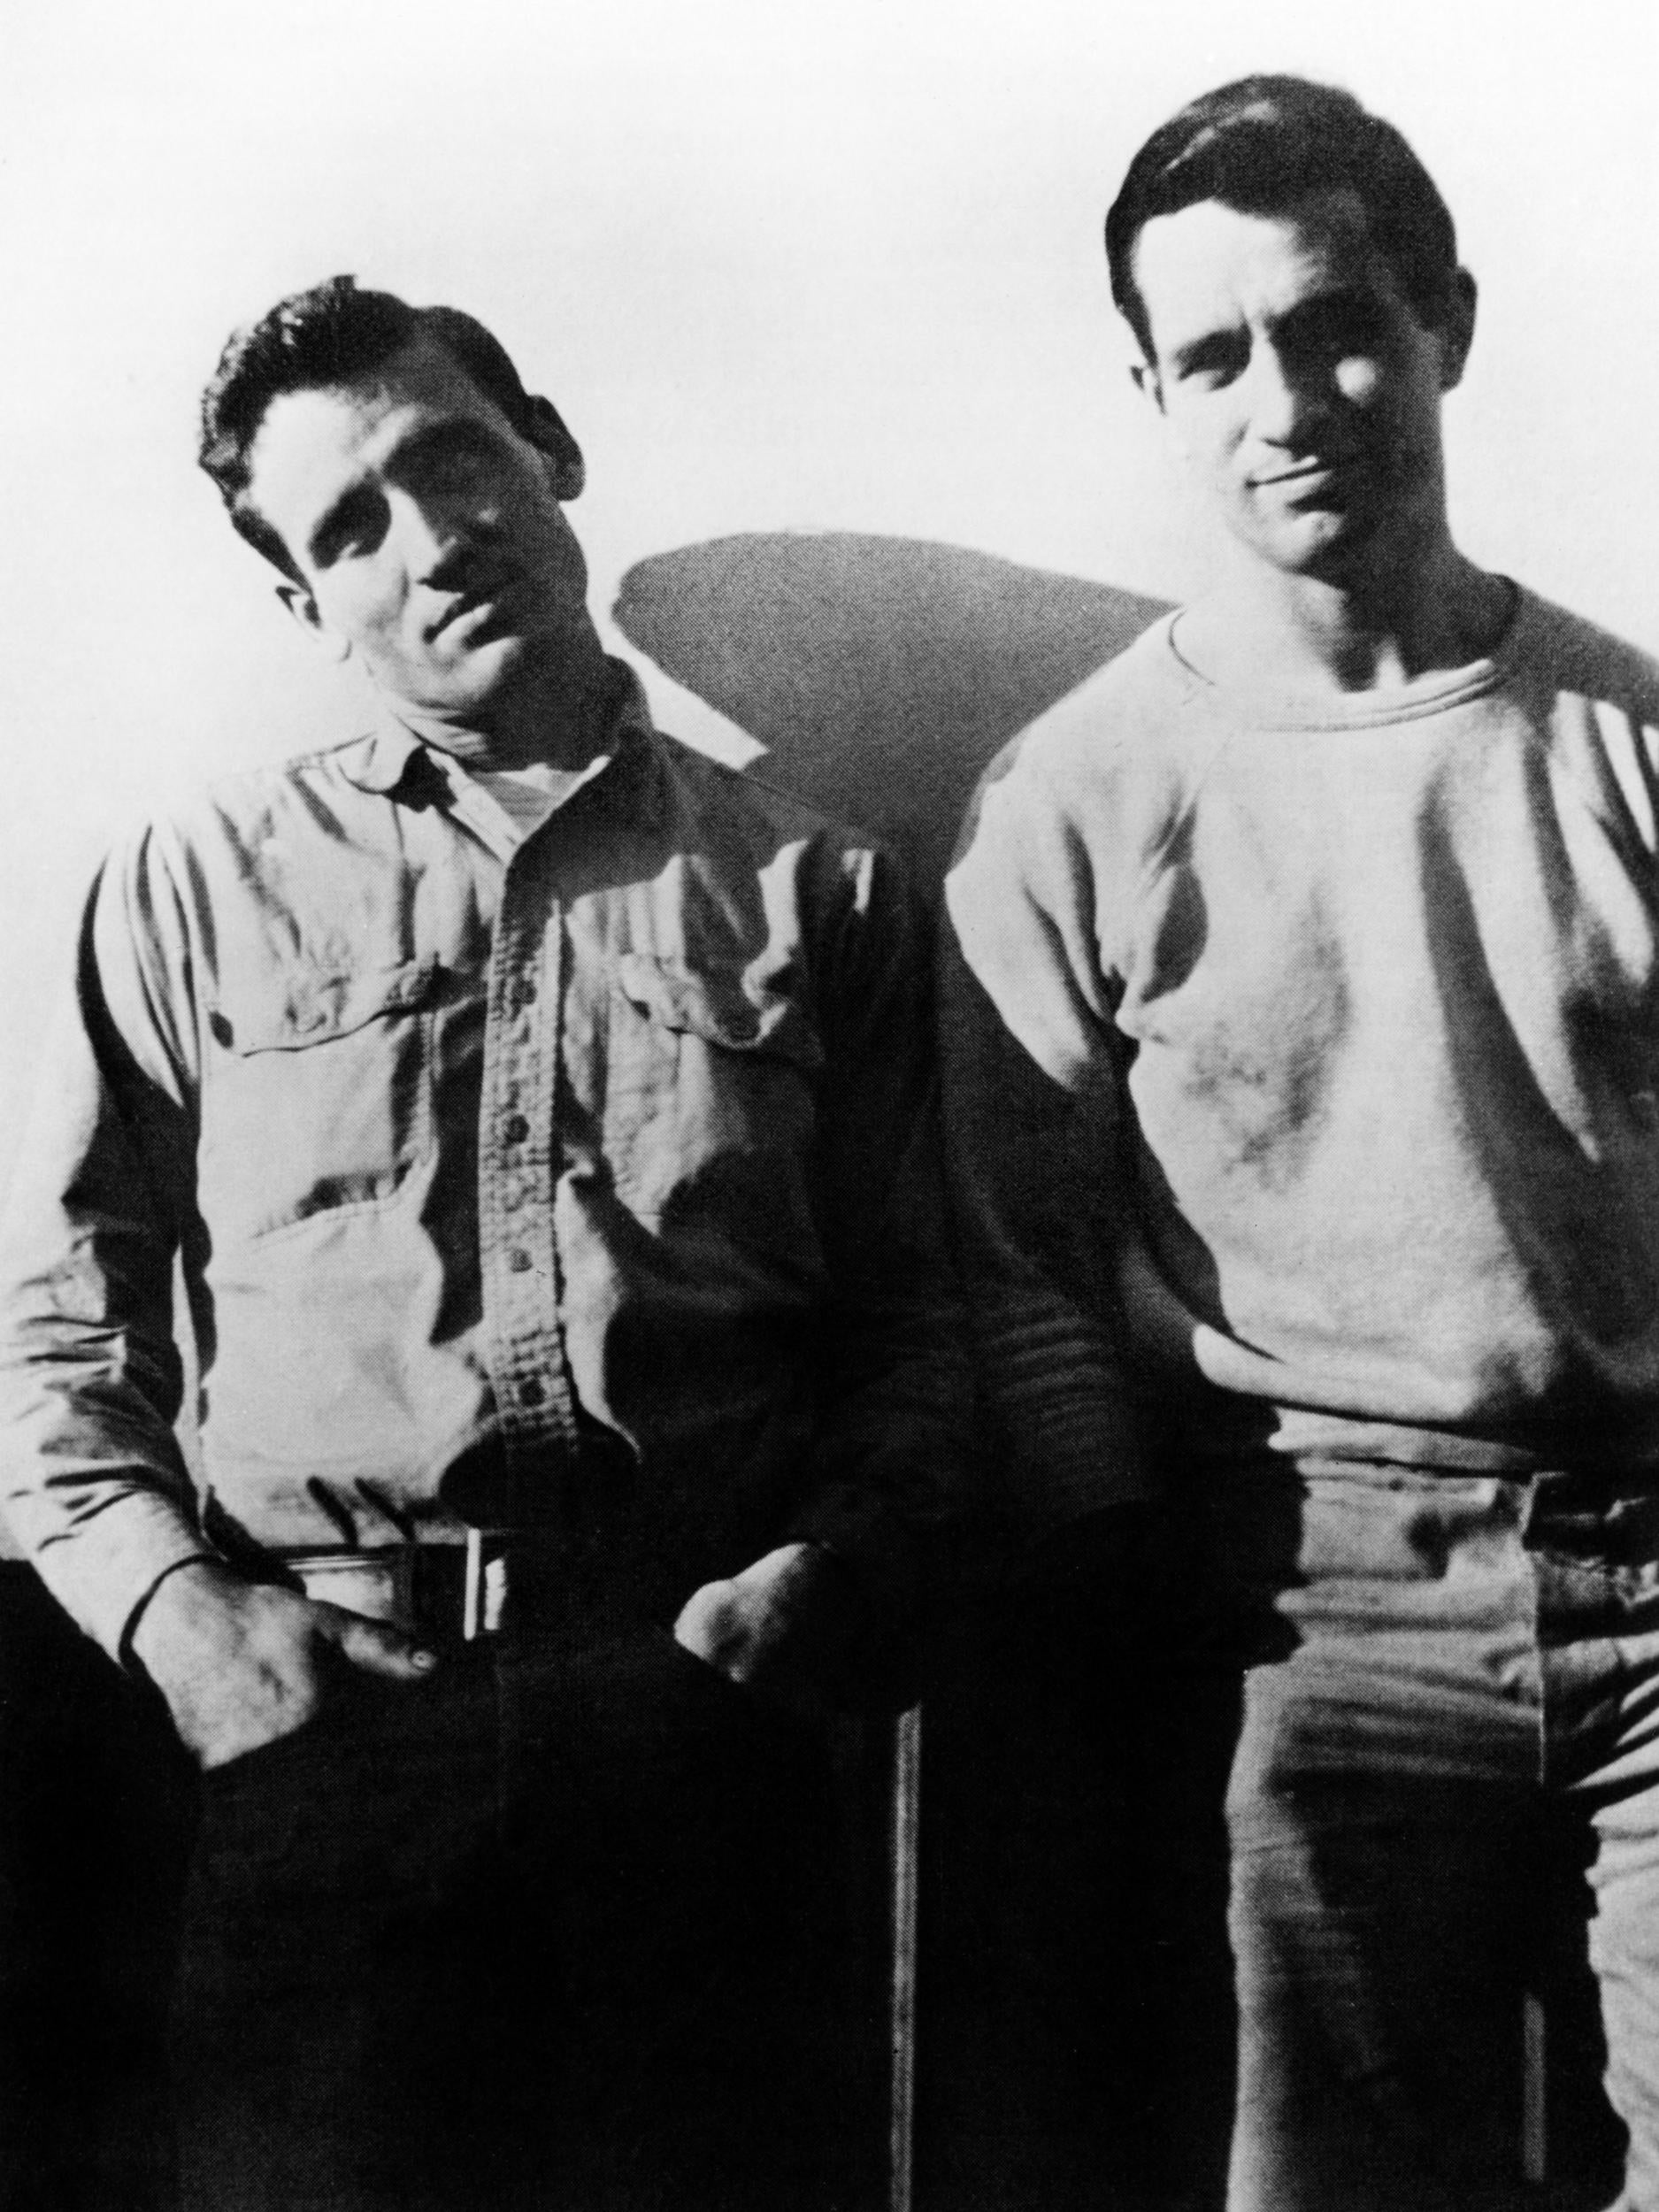 Inspiration: Kerouac, left, with Neal Cassady